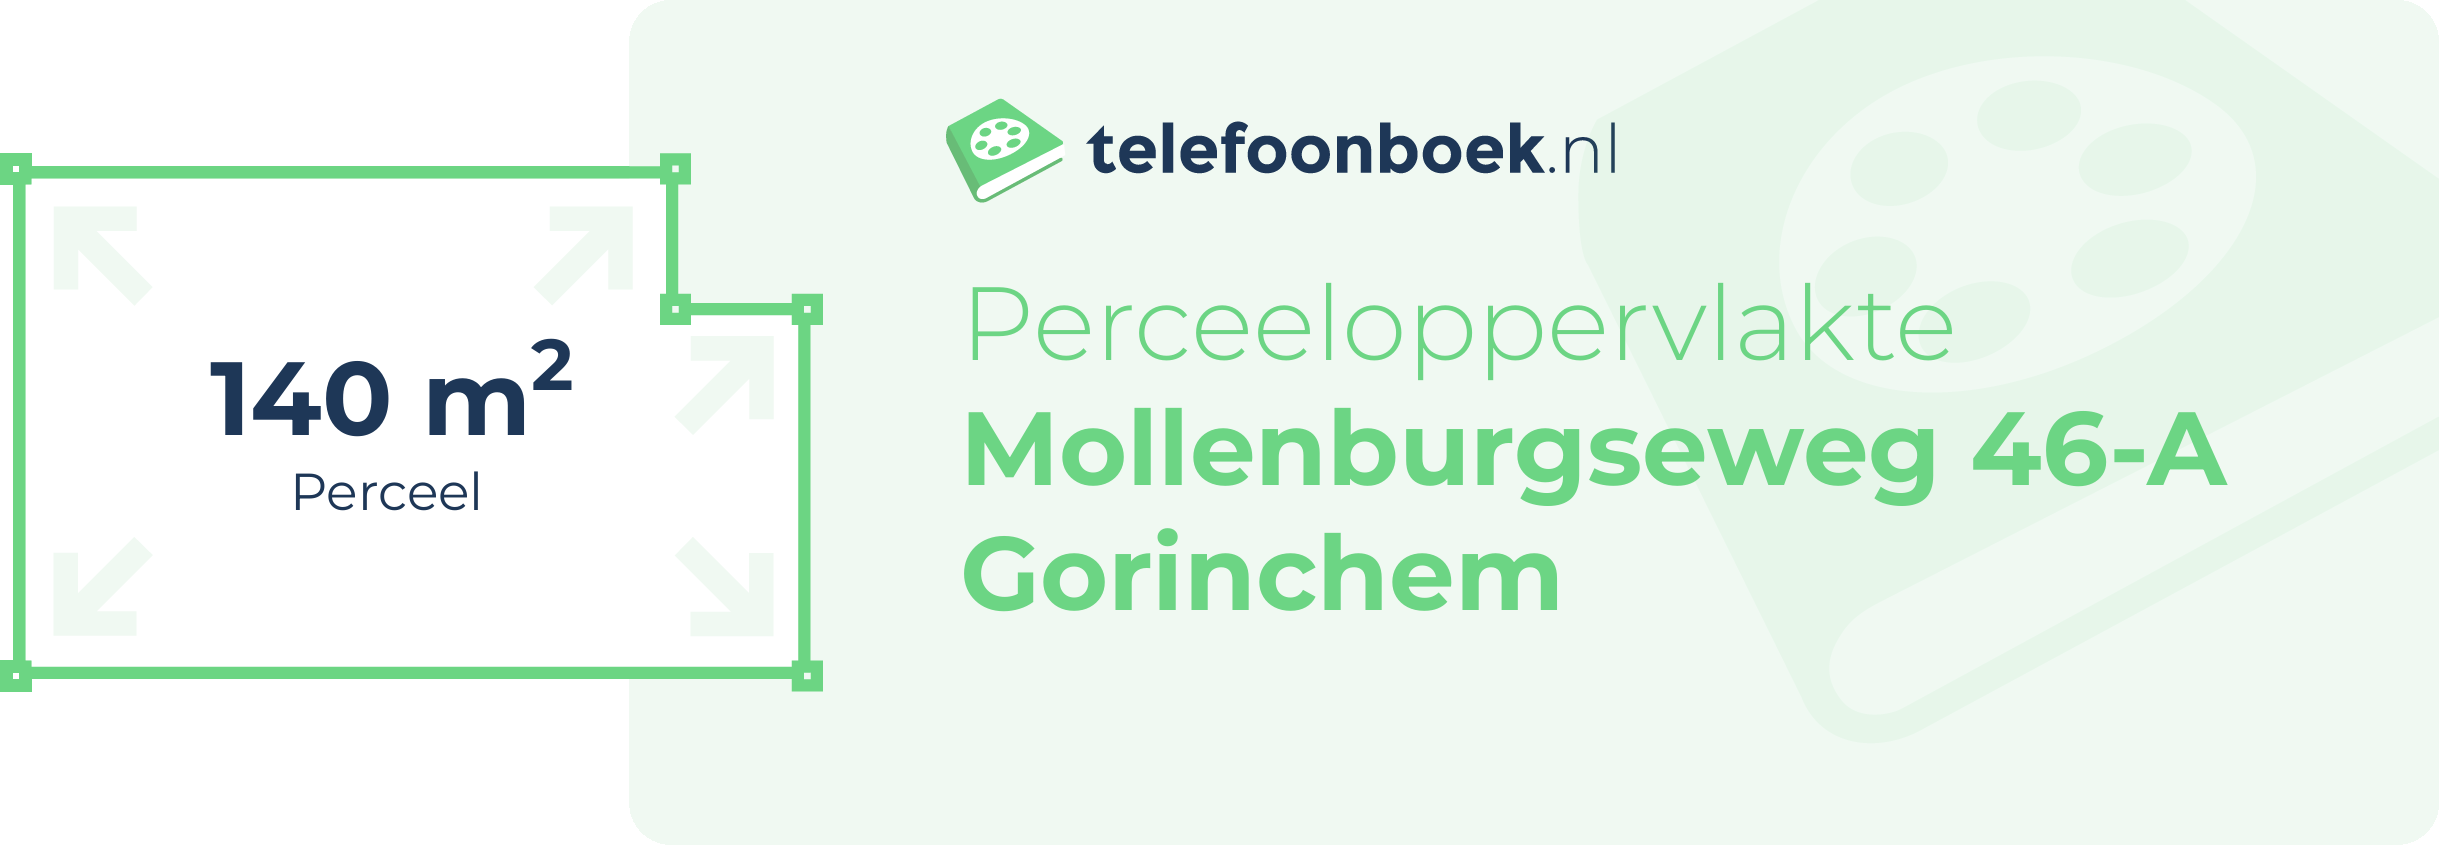 Perceeloppervlakte Mollenburgseweg 46-A Gorinchem